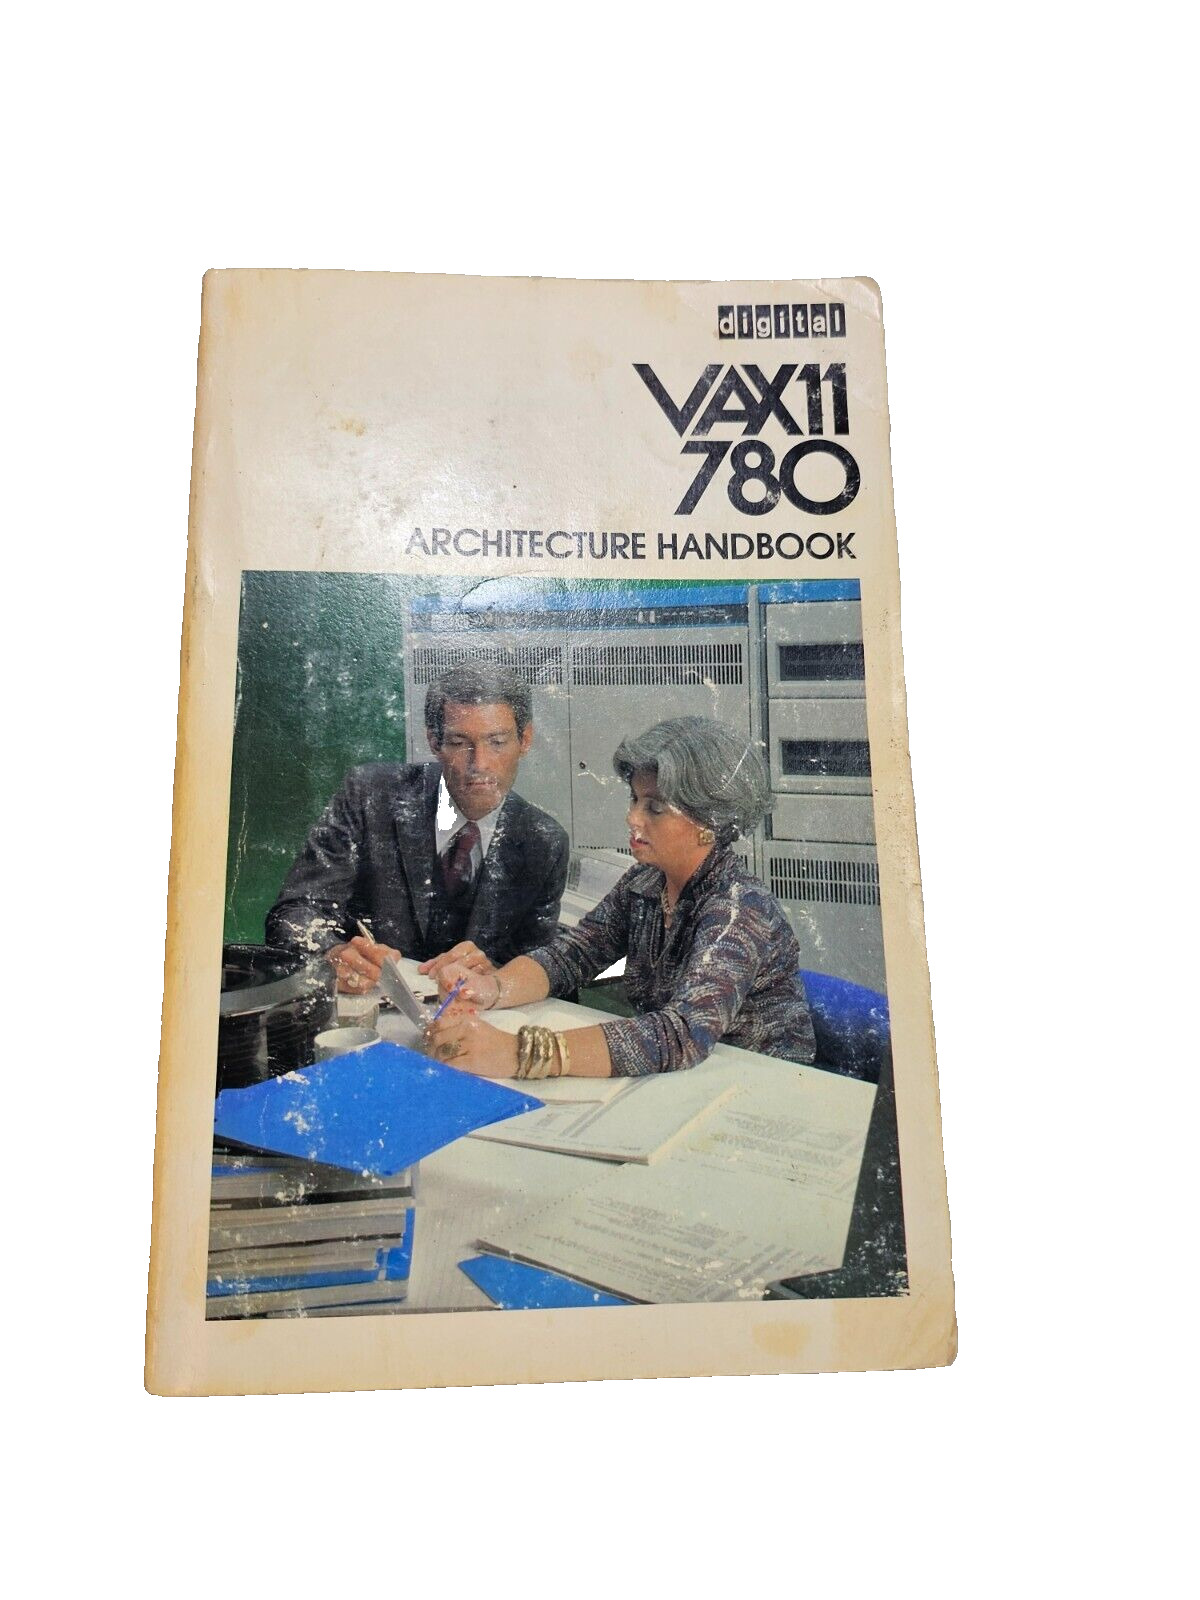 Rare Vintage 70's Digital DEC VAX11 780 Architecture Handbook